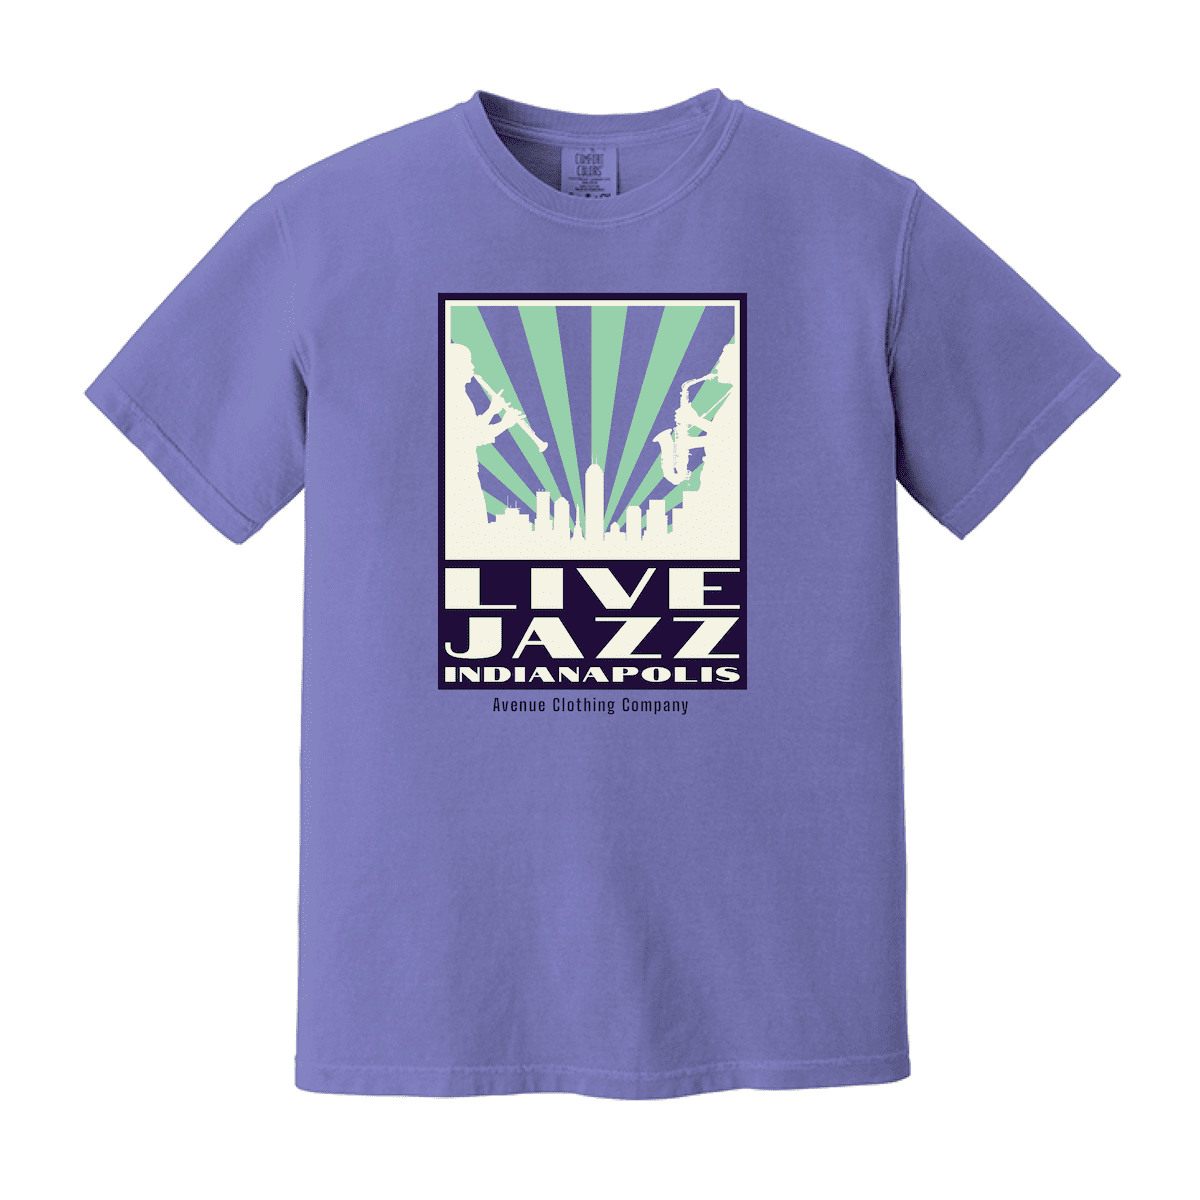 Live Jazz Indy Unisex Garment-Dyed Cotton T-shirt - Avenue Clothing Company 